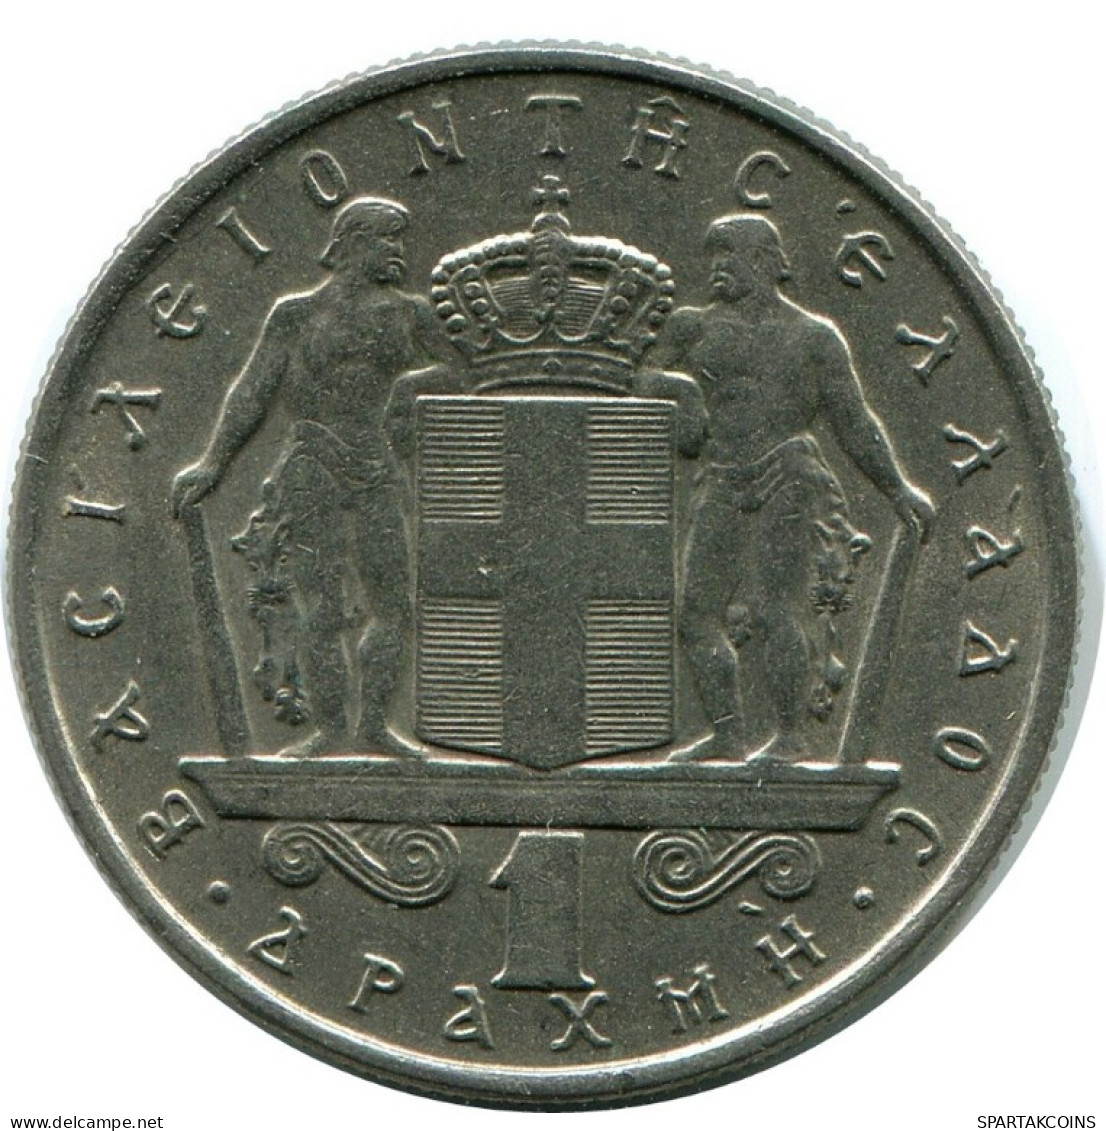 1 DRACHMA 1967 GREECE Coin Constantine II #AH722.U.A - Greece